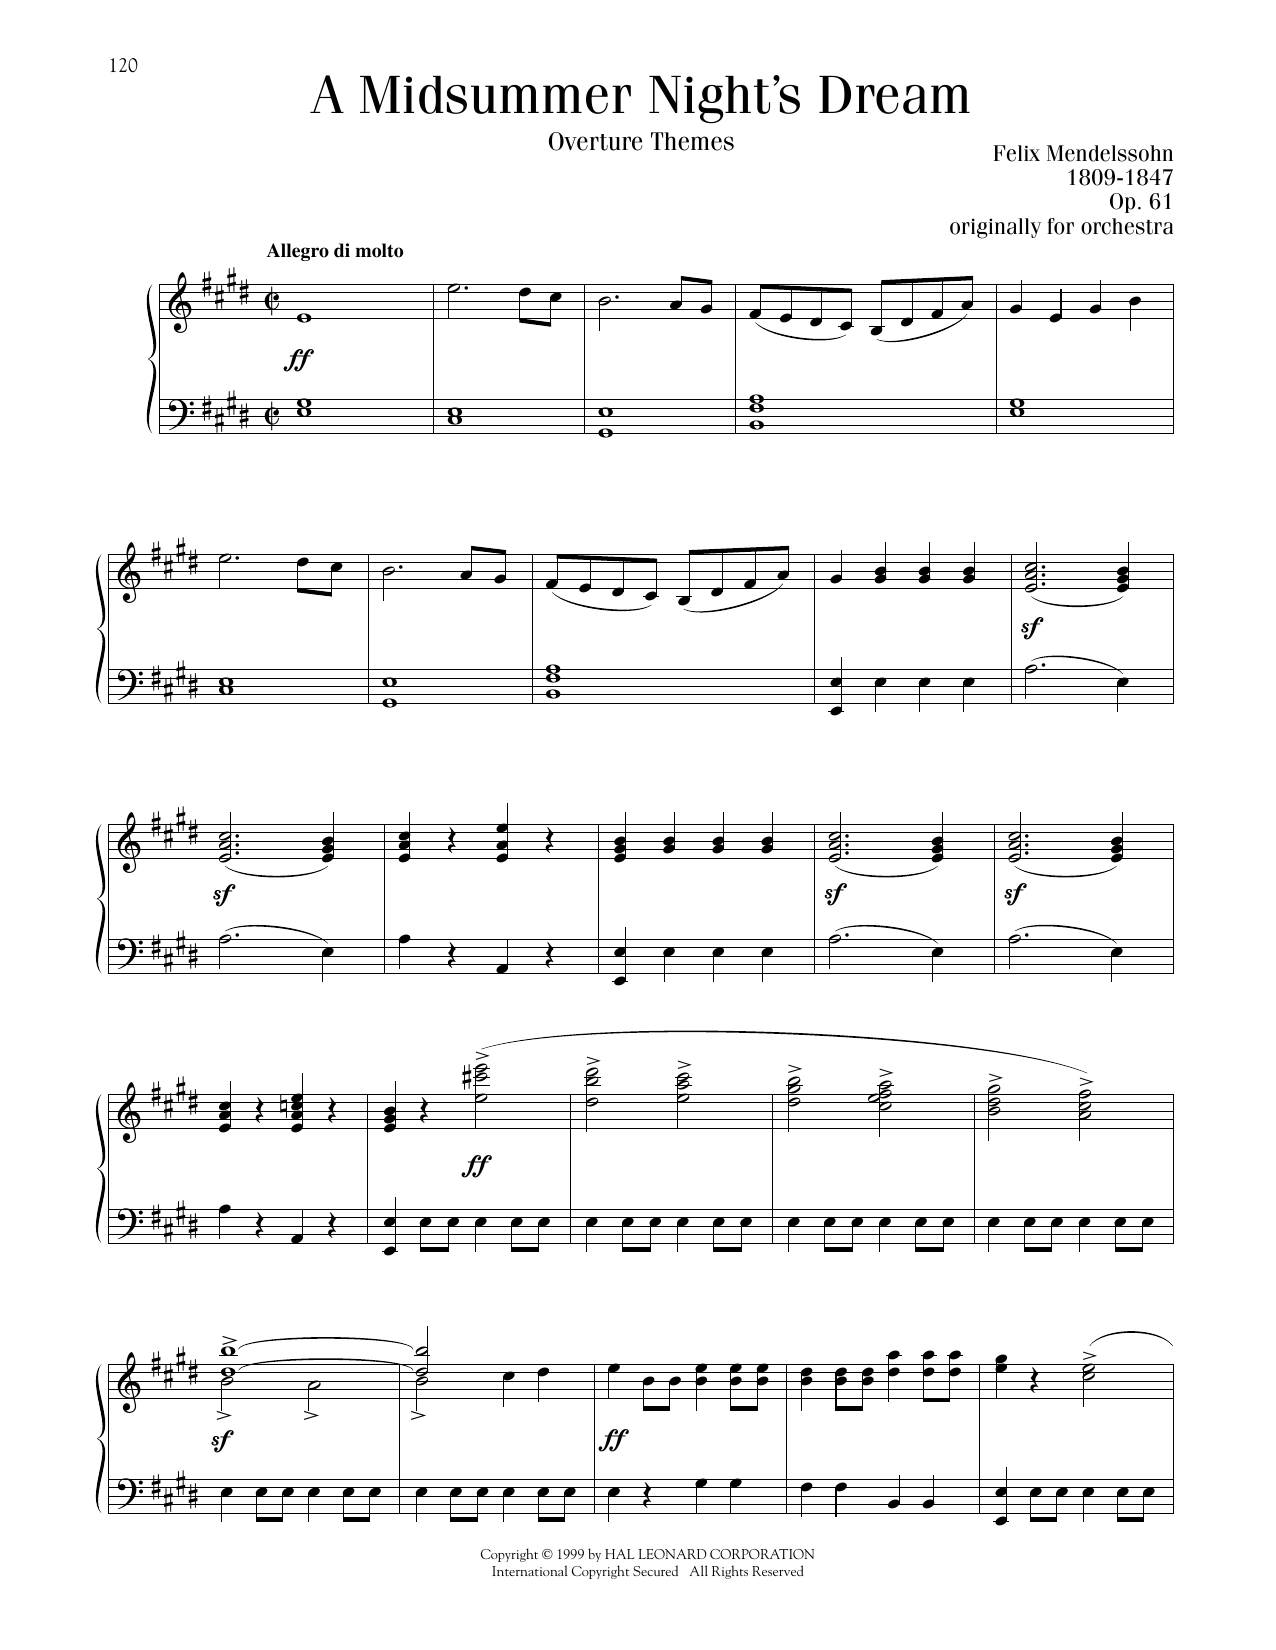 Felix Mendelssohn A Midsummer Night's Dream Overture, Excerpt sheet music notes printable PDF score